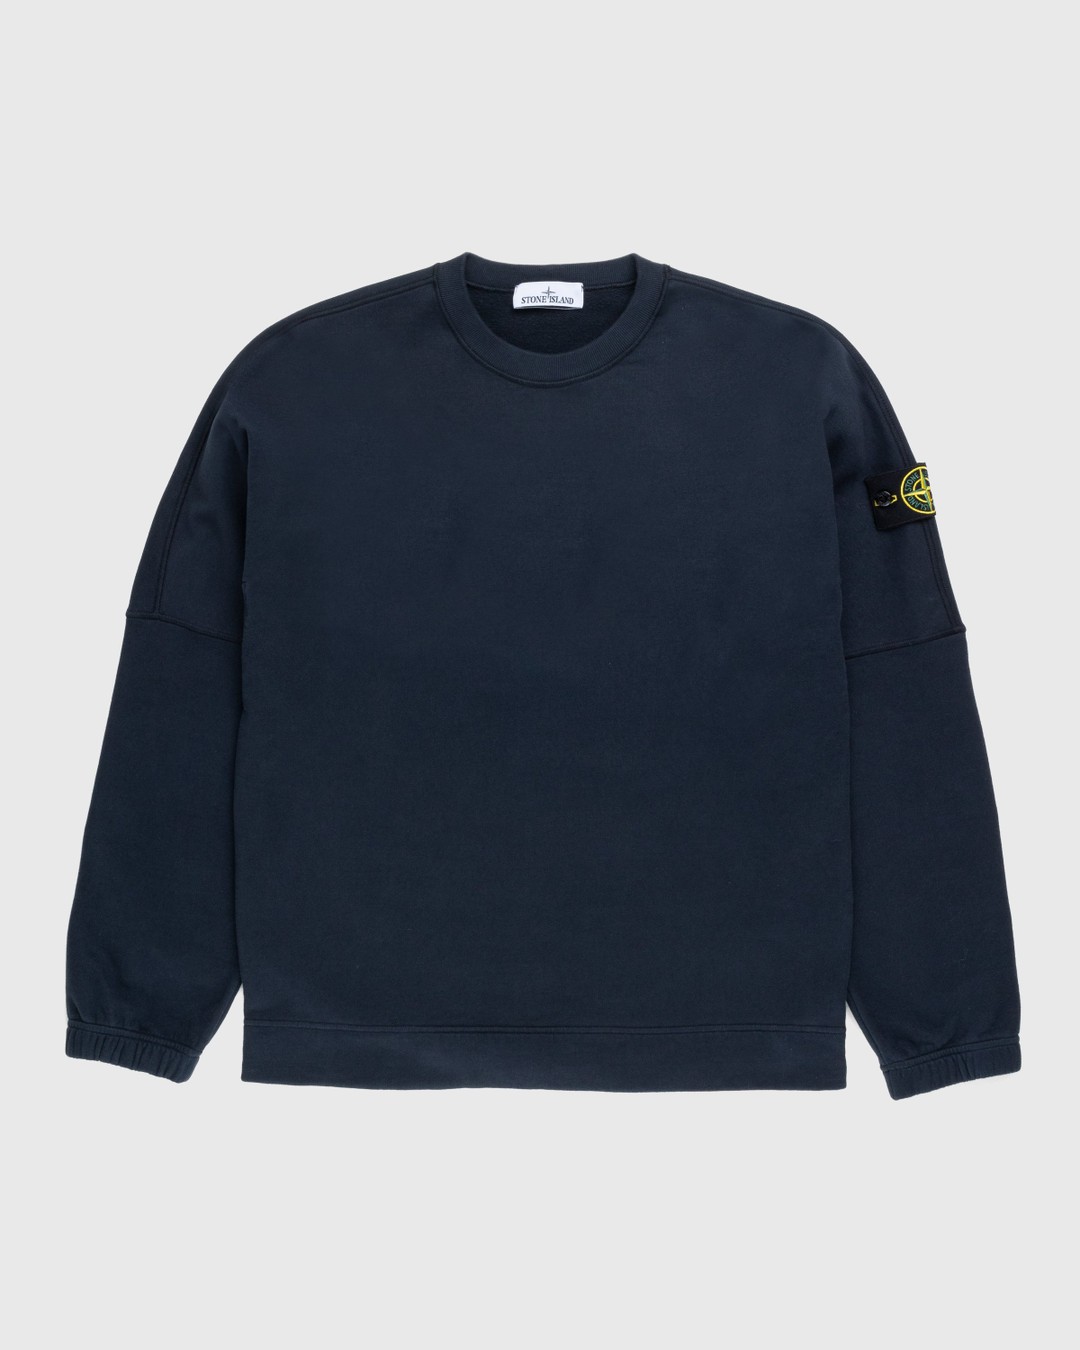 Stone Island – Garment-Dyed Fleece Crewneck Sweatshirt Navy | Highsnobiety Shop